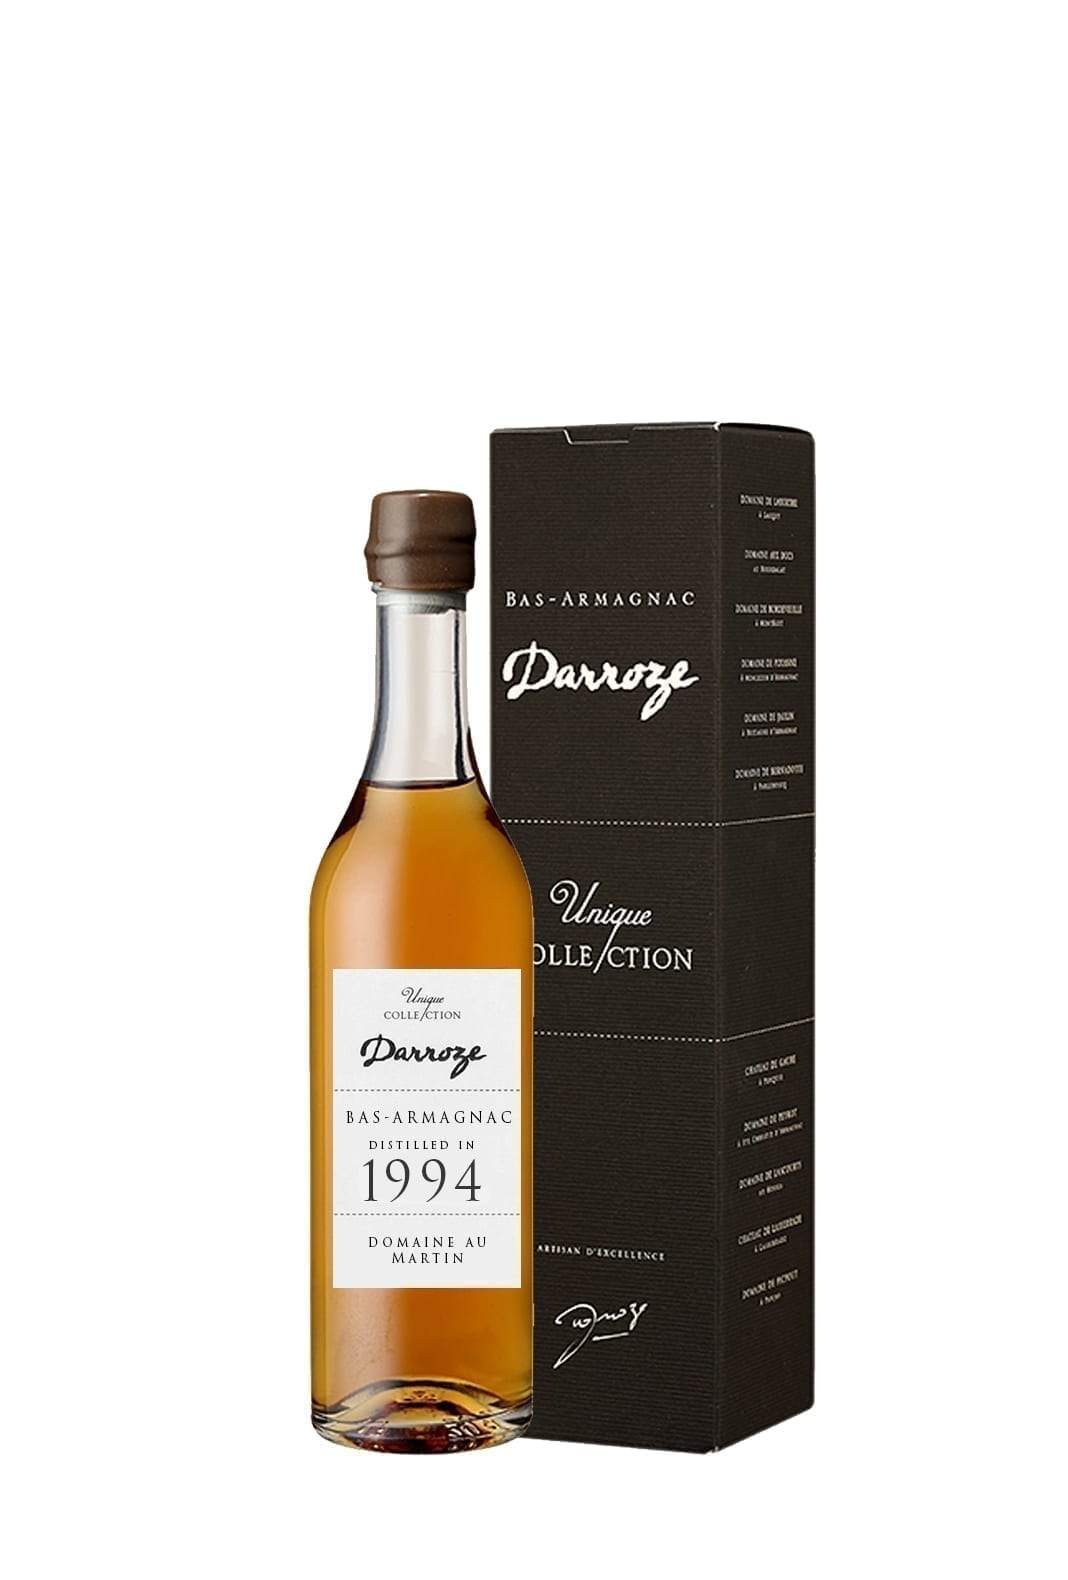 Darroze 1994 Martin Grand Bas Armagnac 48.5% 200ml | Brandy | Shop online at Spirits of France